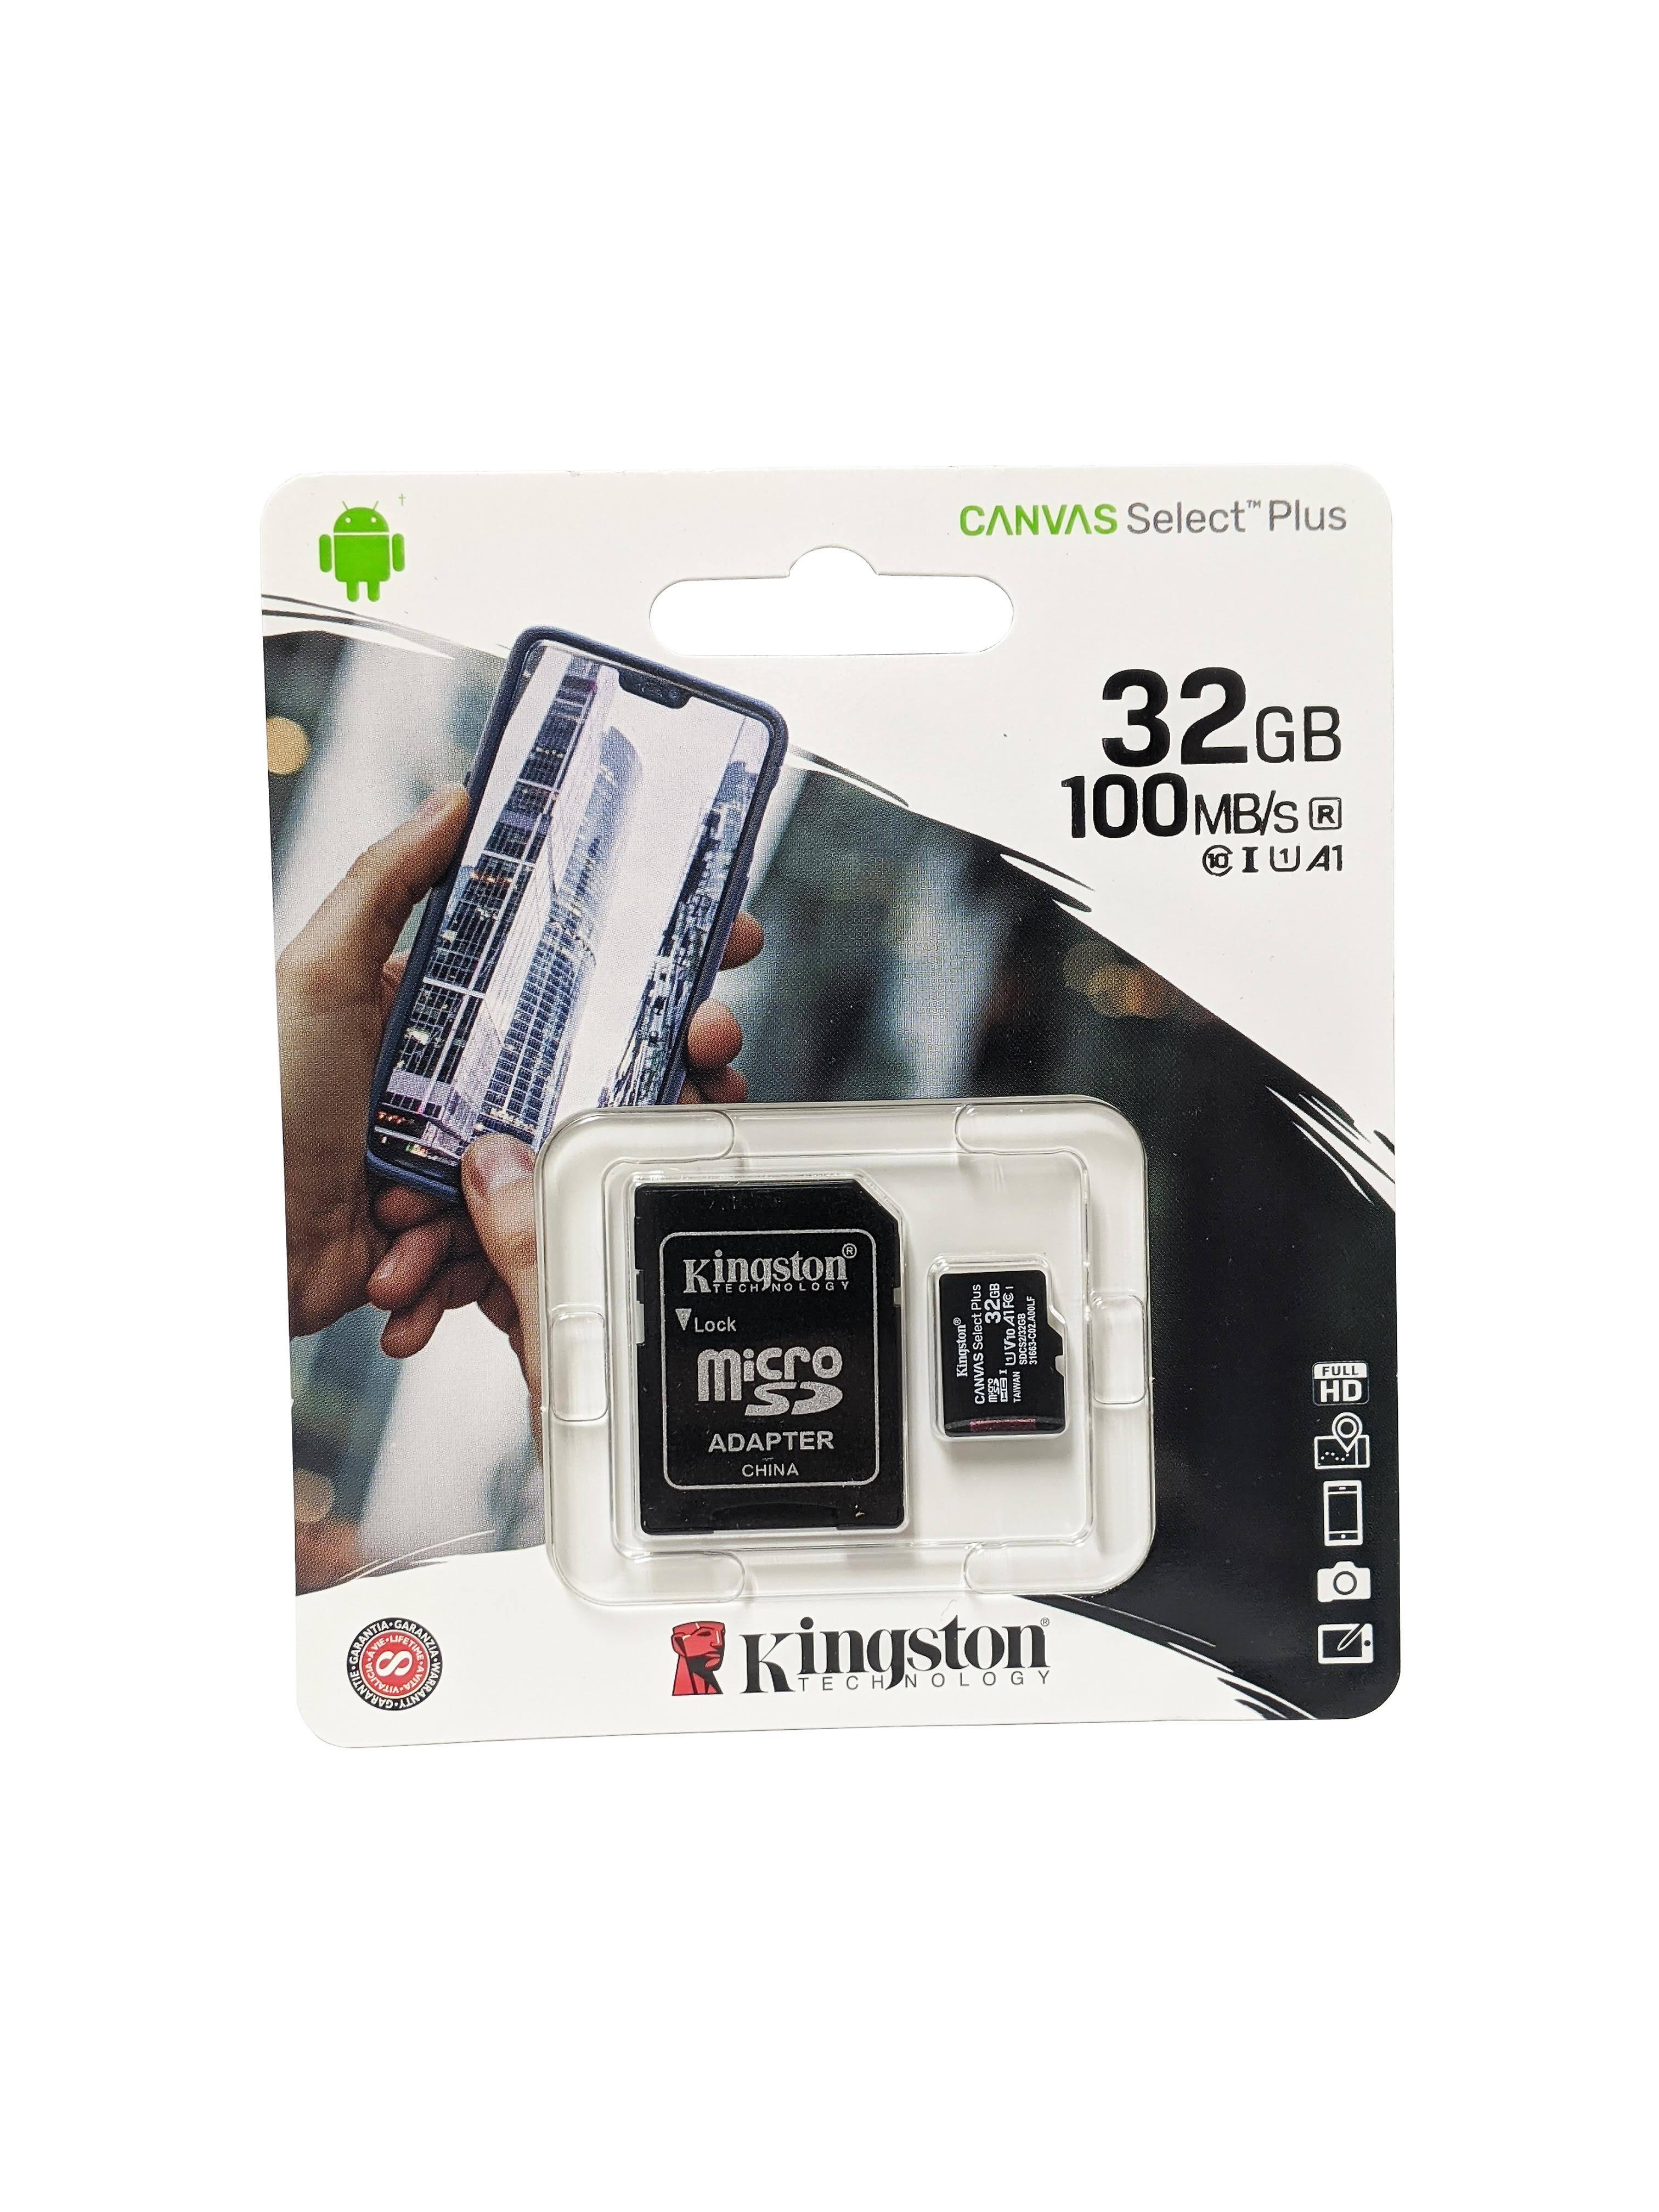 Kingston microSDHC Canvas Select Plus Memory Card - 32GB